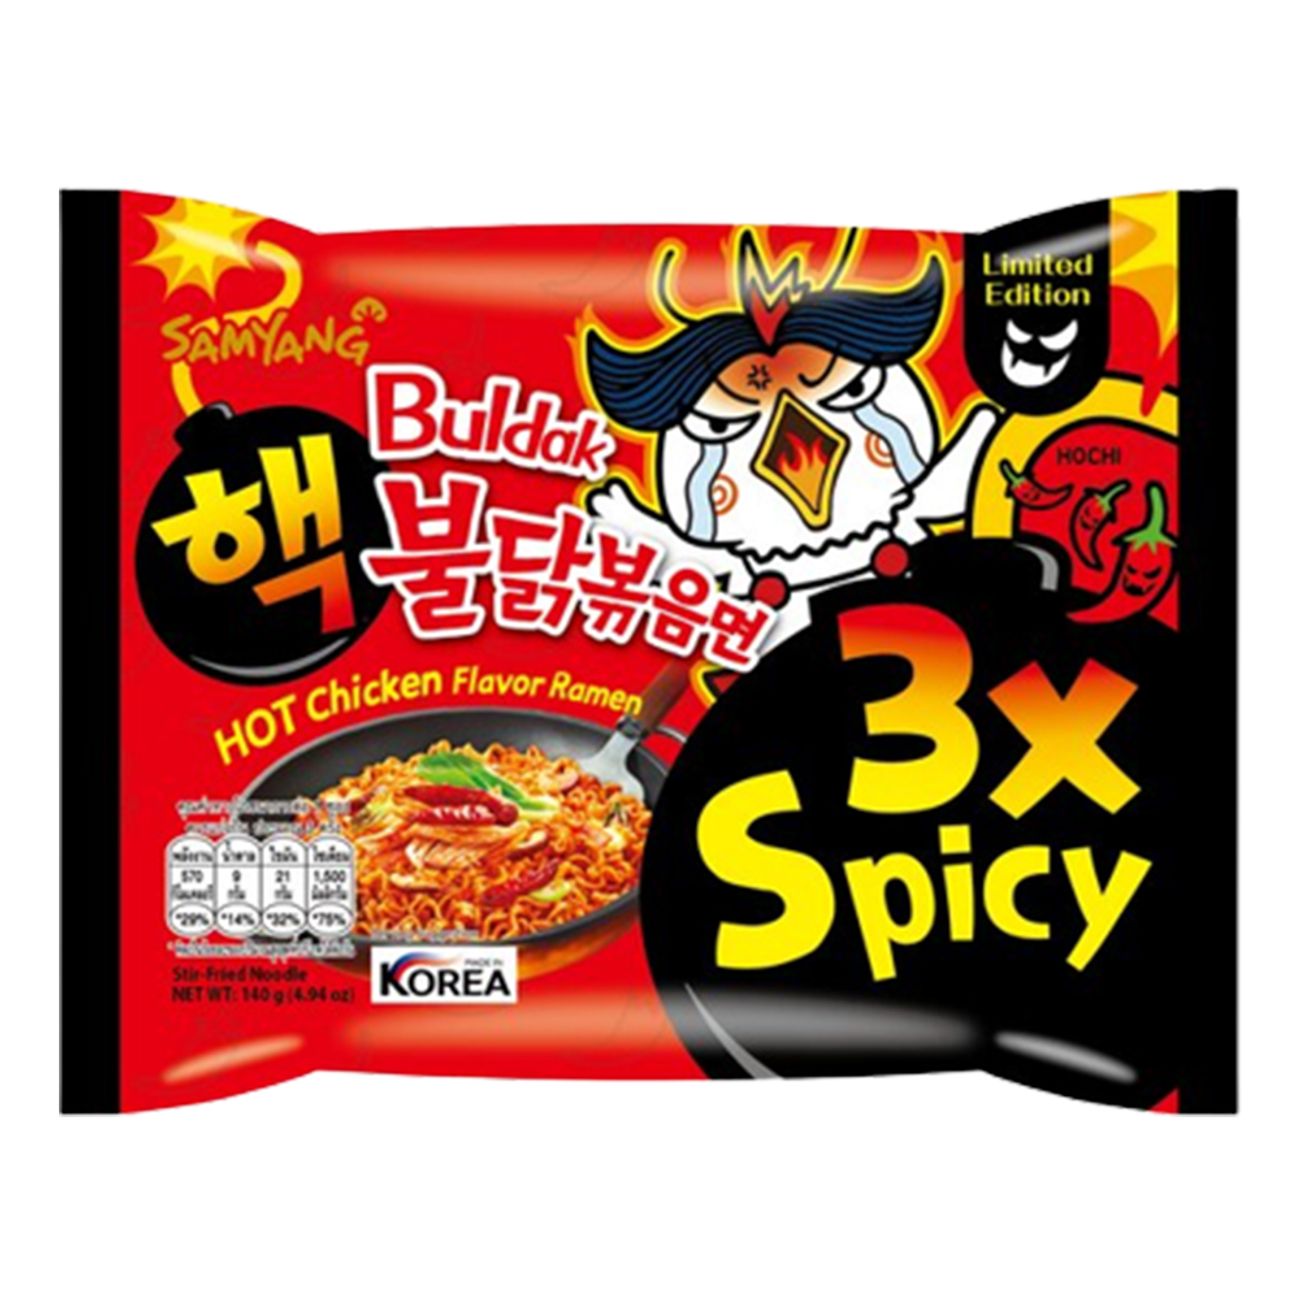 samyang-hot-chicken-flavor-ramen-3xspicy-94715-2